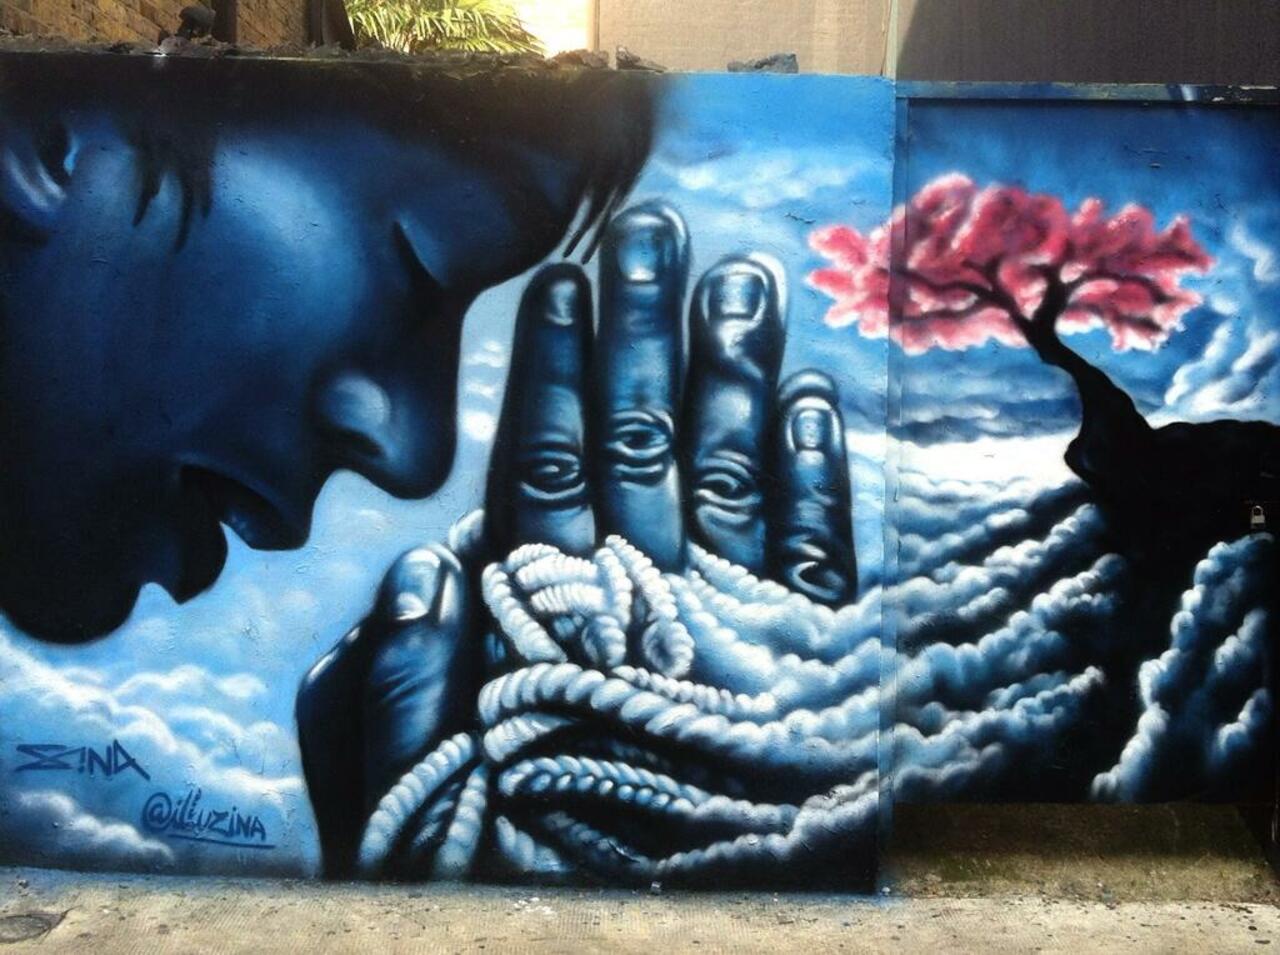 RT @designopinion: Beautiful @illuzina #streetart in Shoreditch - #art #graffiti @GoogleStreetArt @MolokoVelloce @GraffitiFeed http://t.co/JLdj9tZgsf